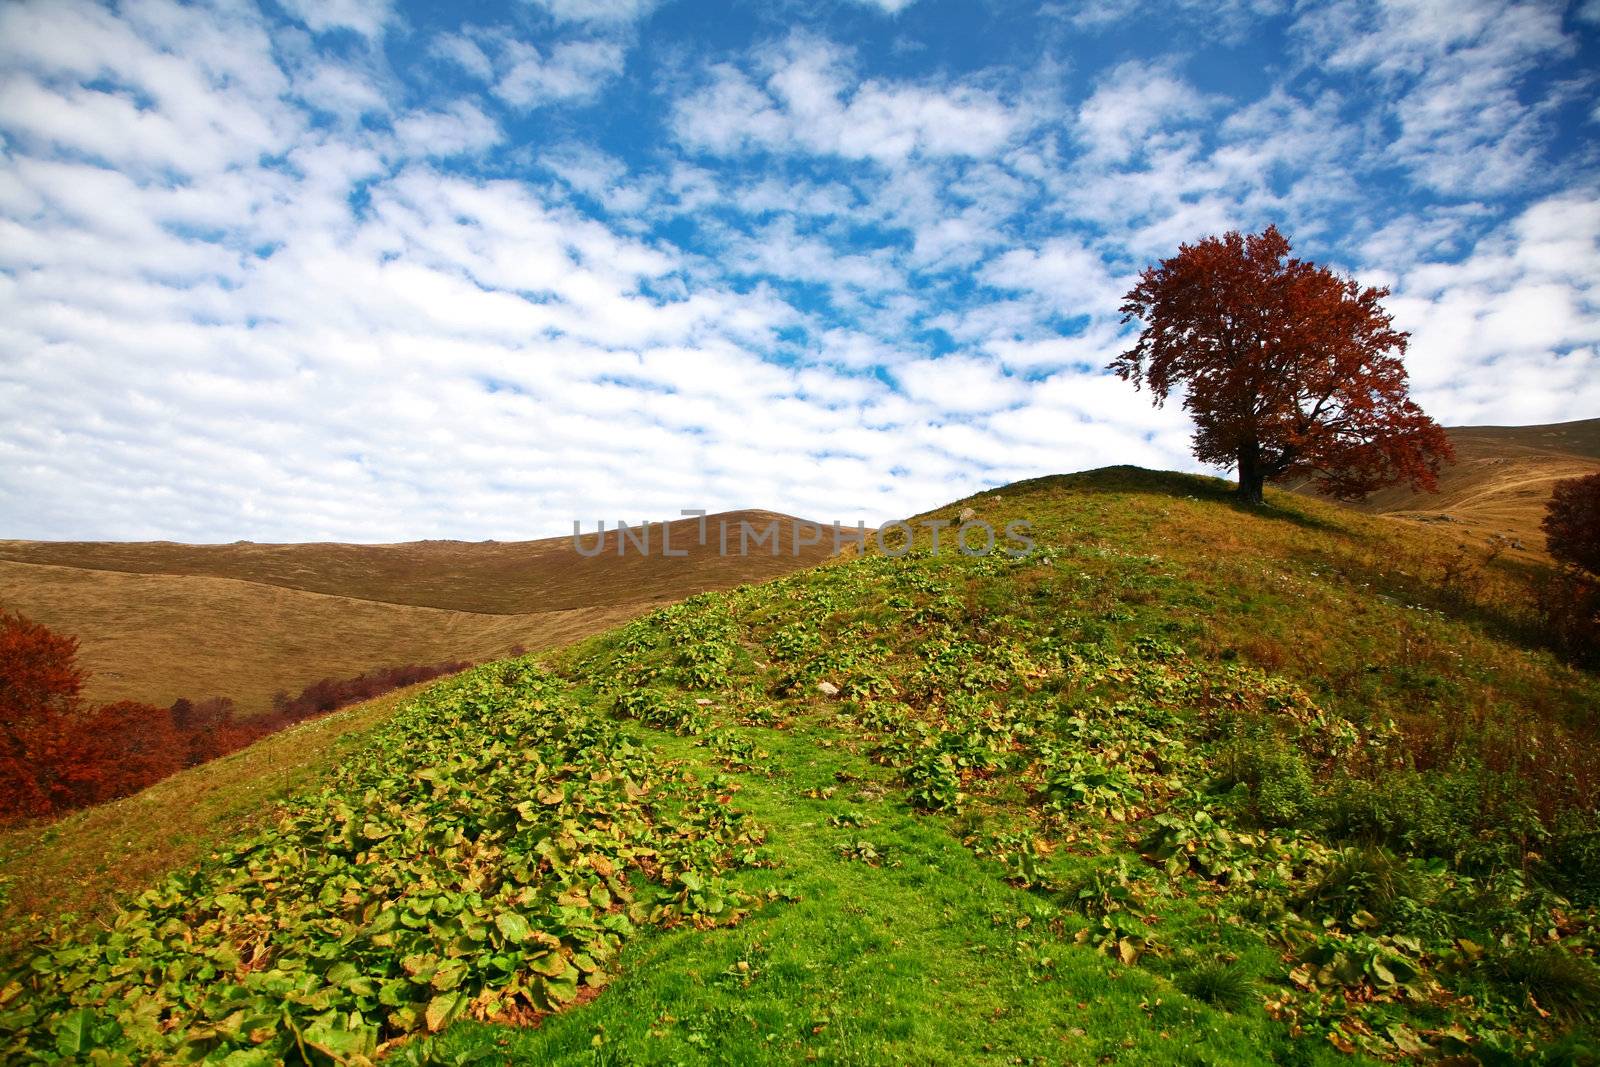 Autumn theme: An image of autumn tree on a hill.